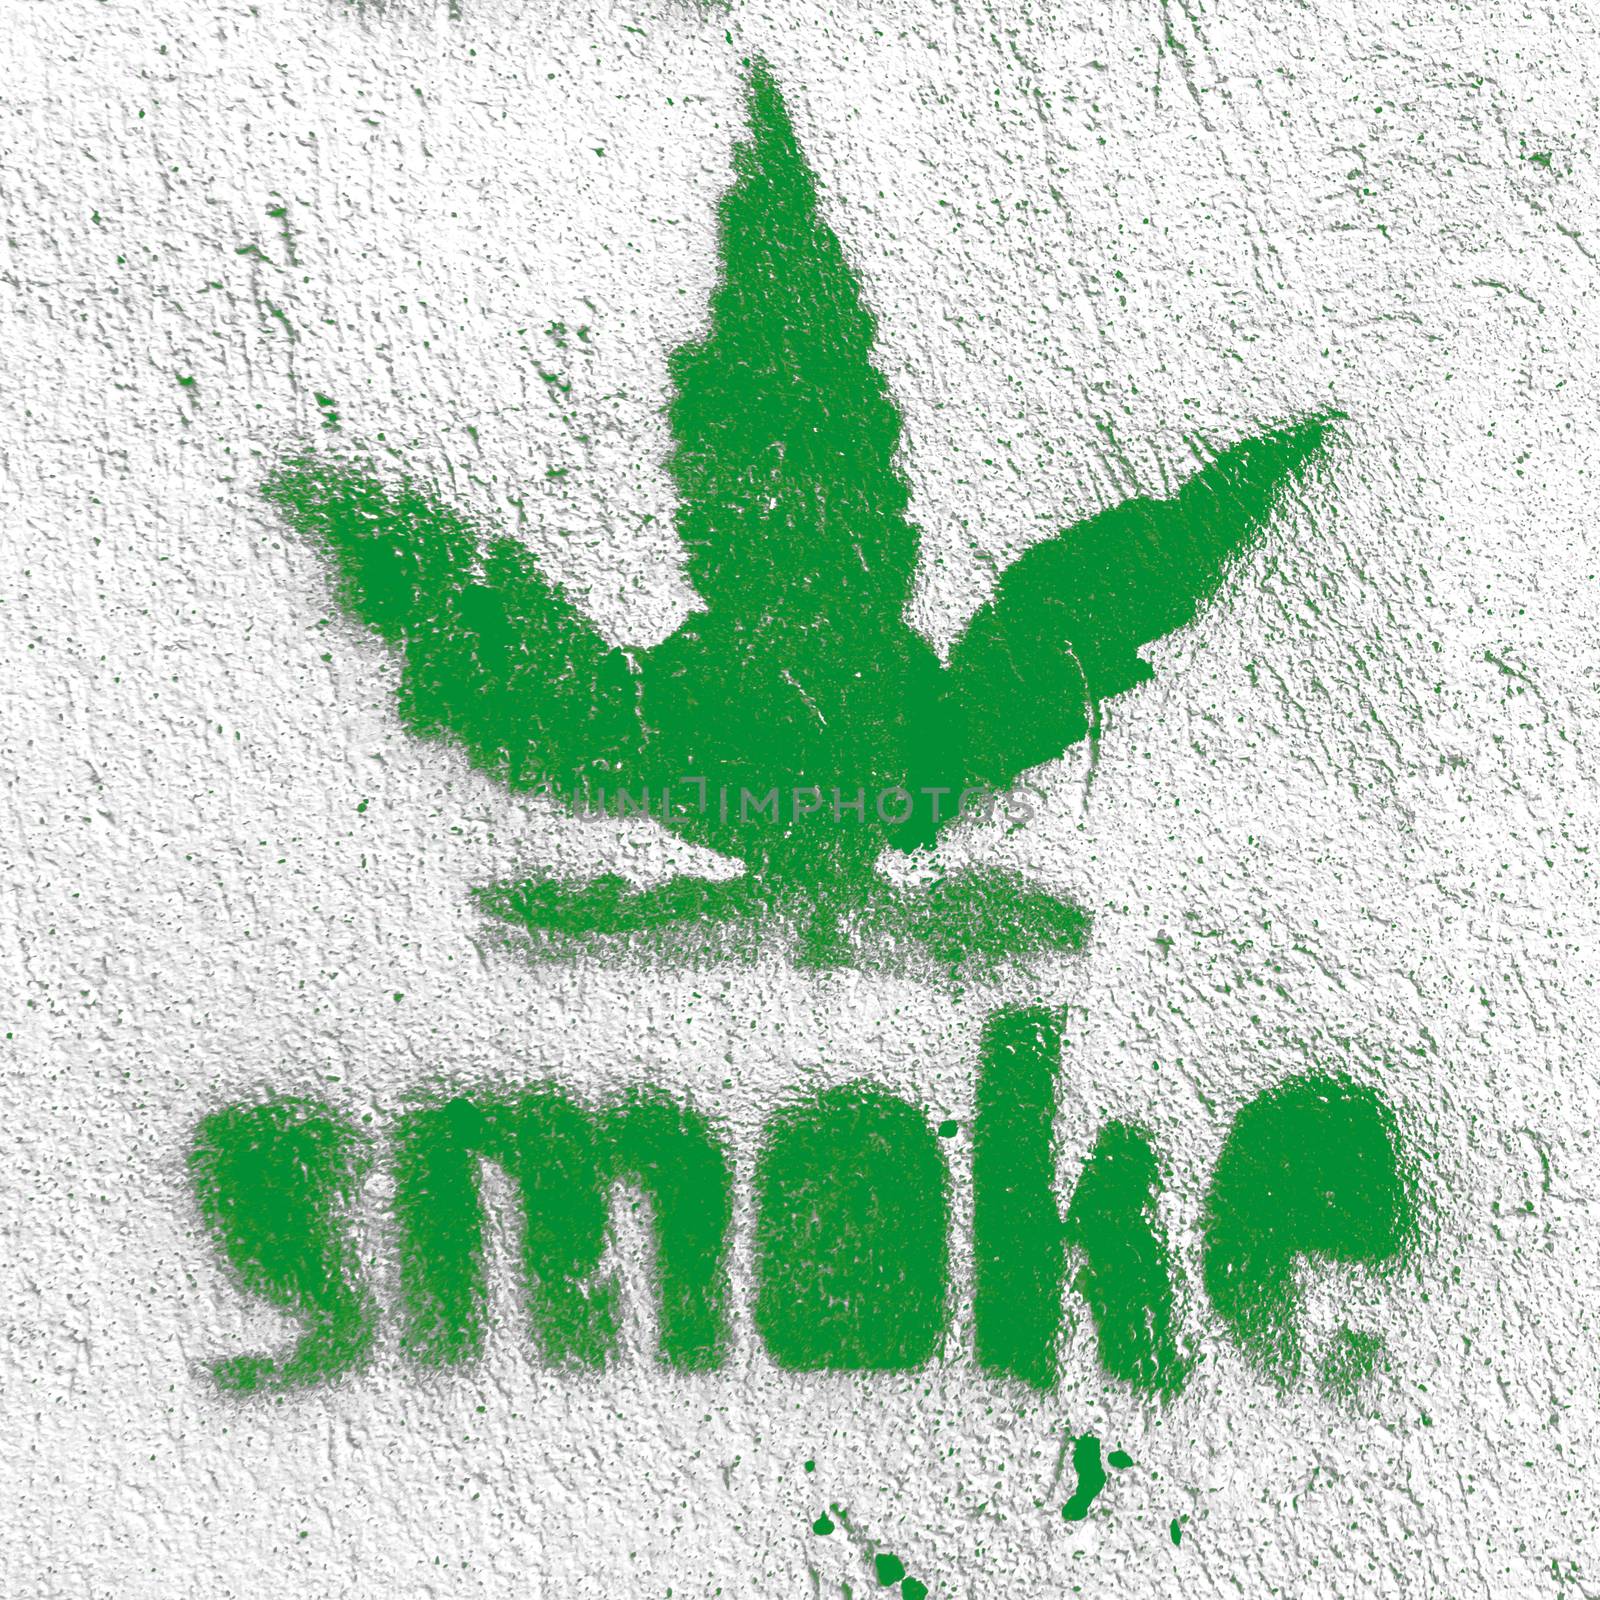 Marijuana leaf symbol on grungy wall with "smoke" message